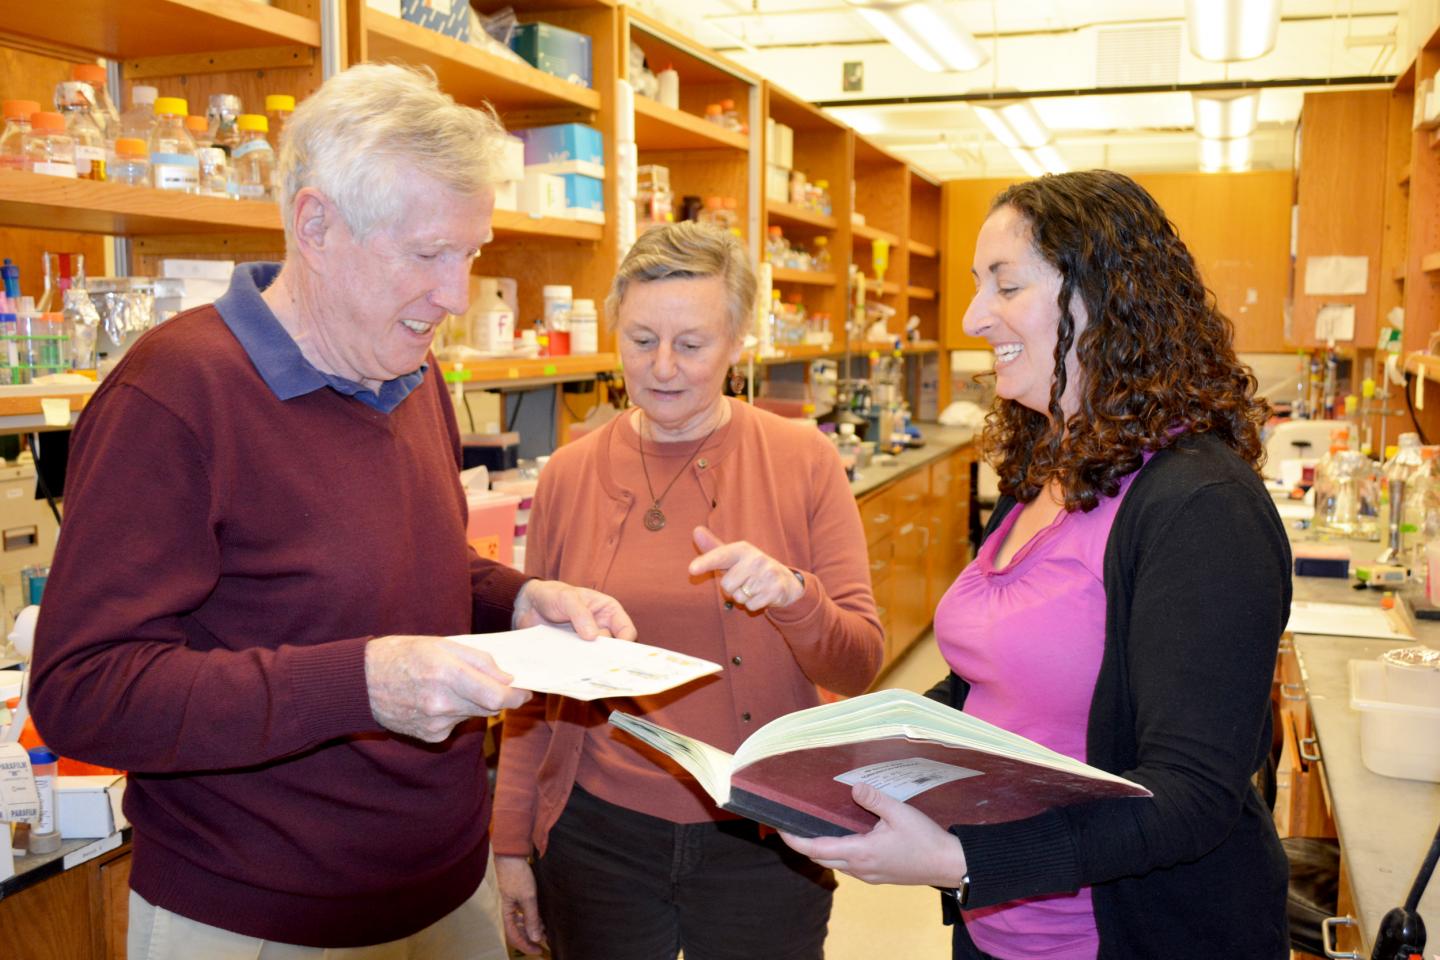 Professor Peter Wright, Professor Jane Dyson and Research Associate Rebecca Berlow